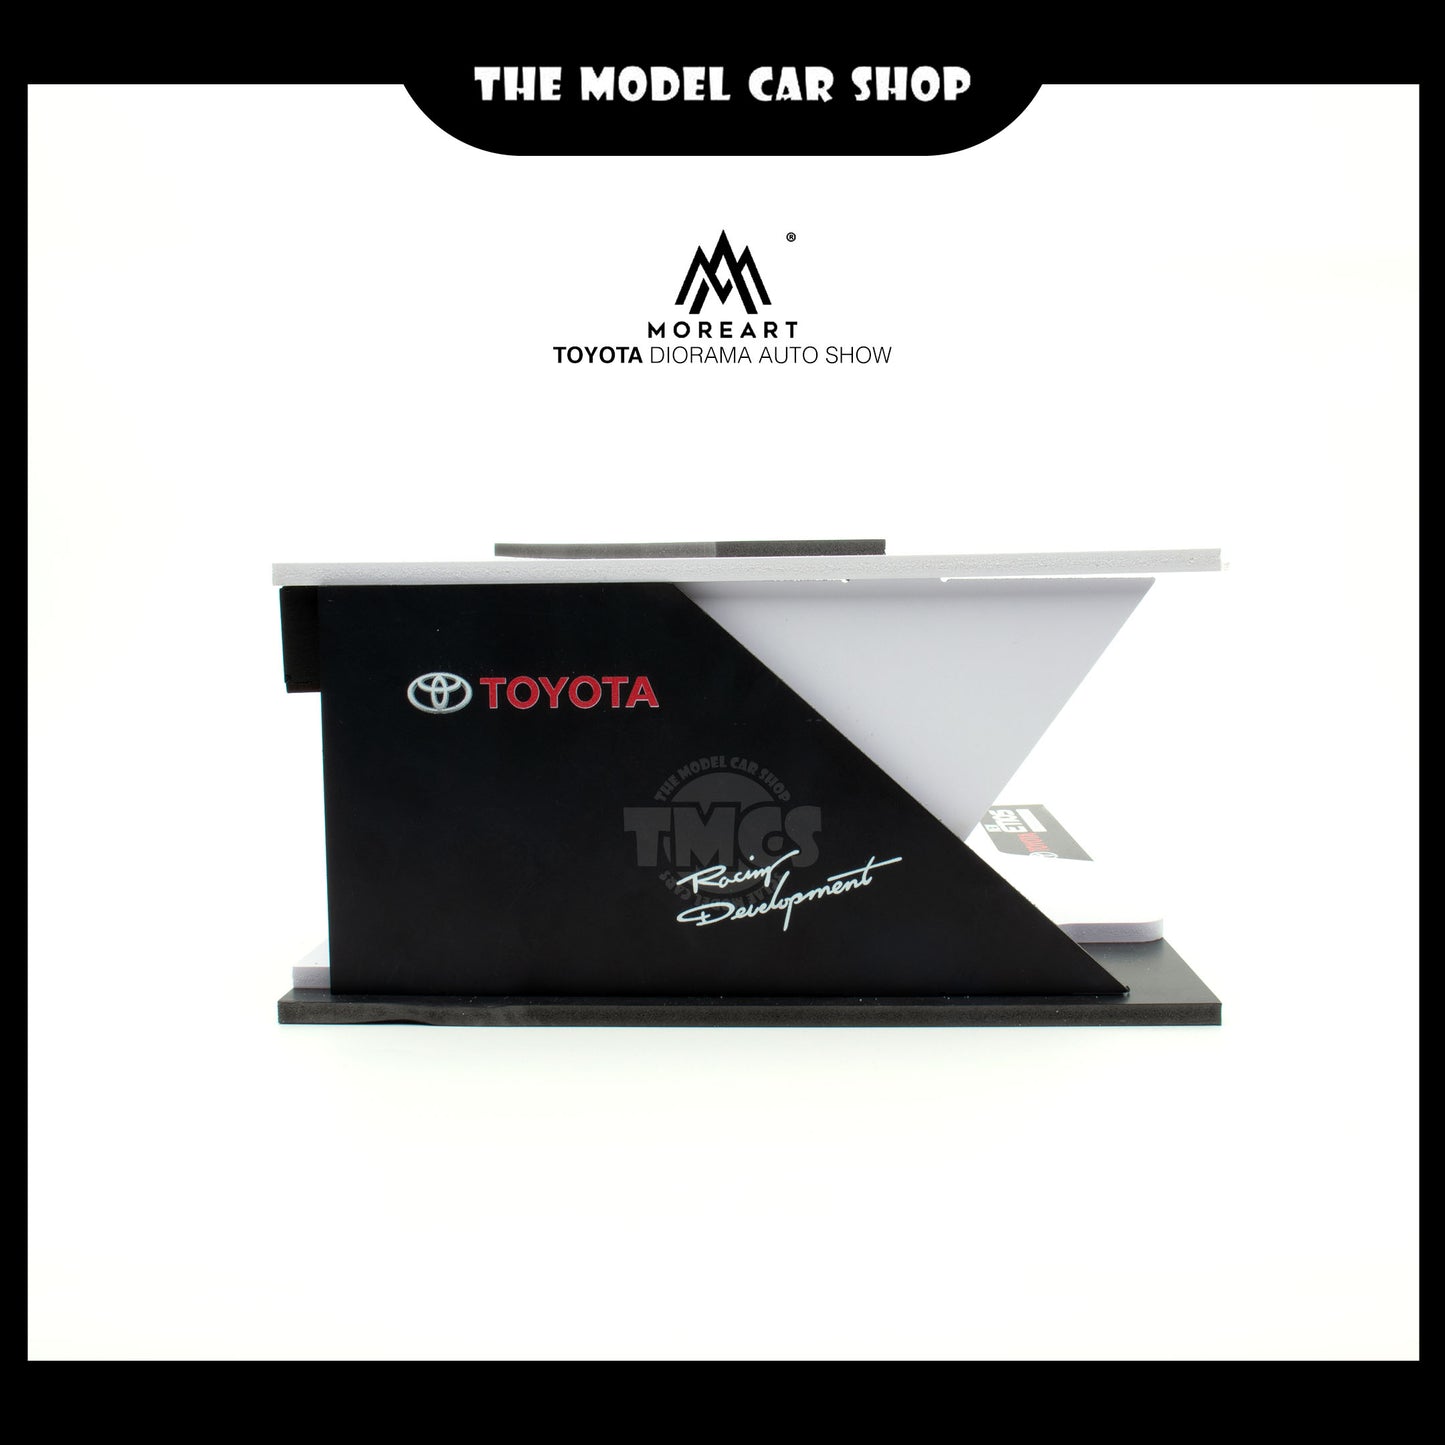 [More Art] Diorama Auto Show - Toyota